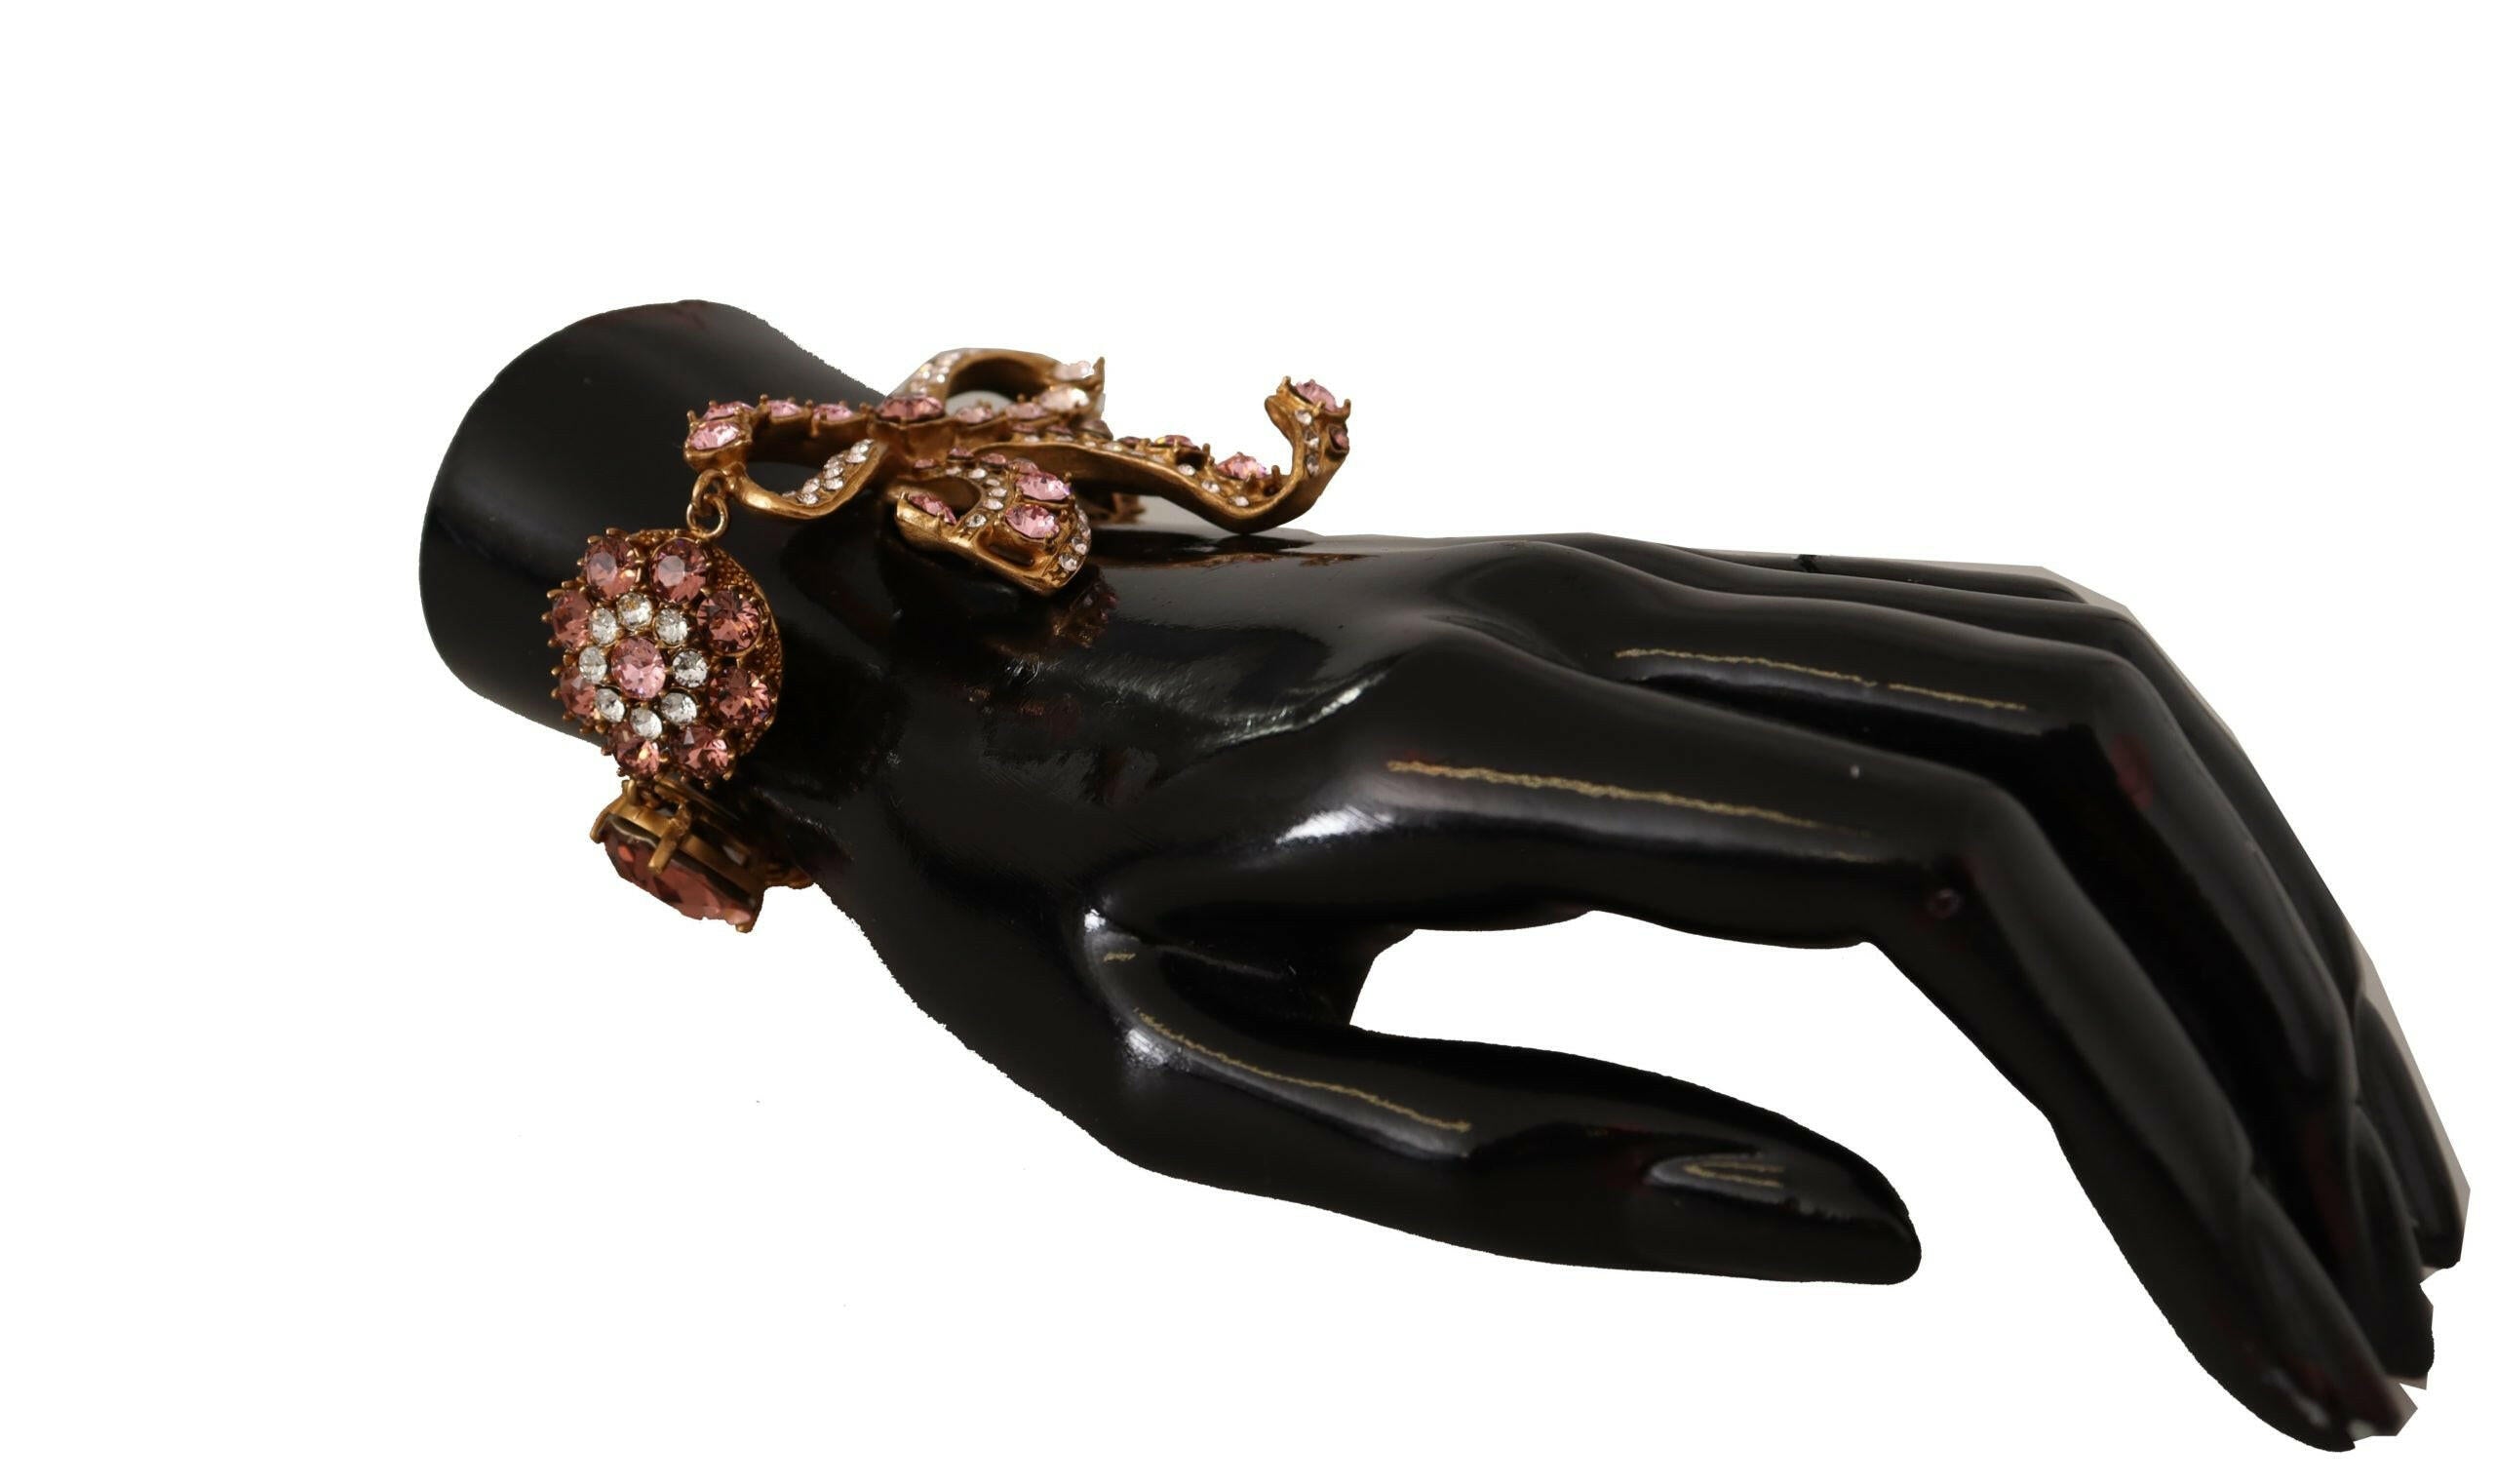 Dolce & Gabbana Gold Brass Chain Baroque Crystal Embellished Bracelet - GENUINE AUTHENTIC BRAND LLC  